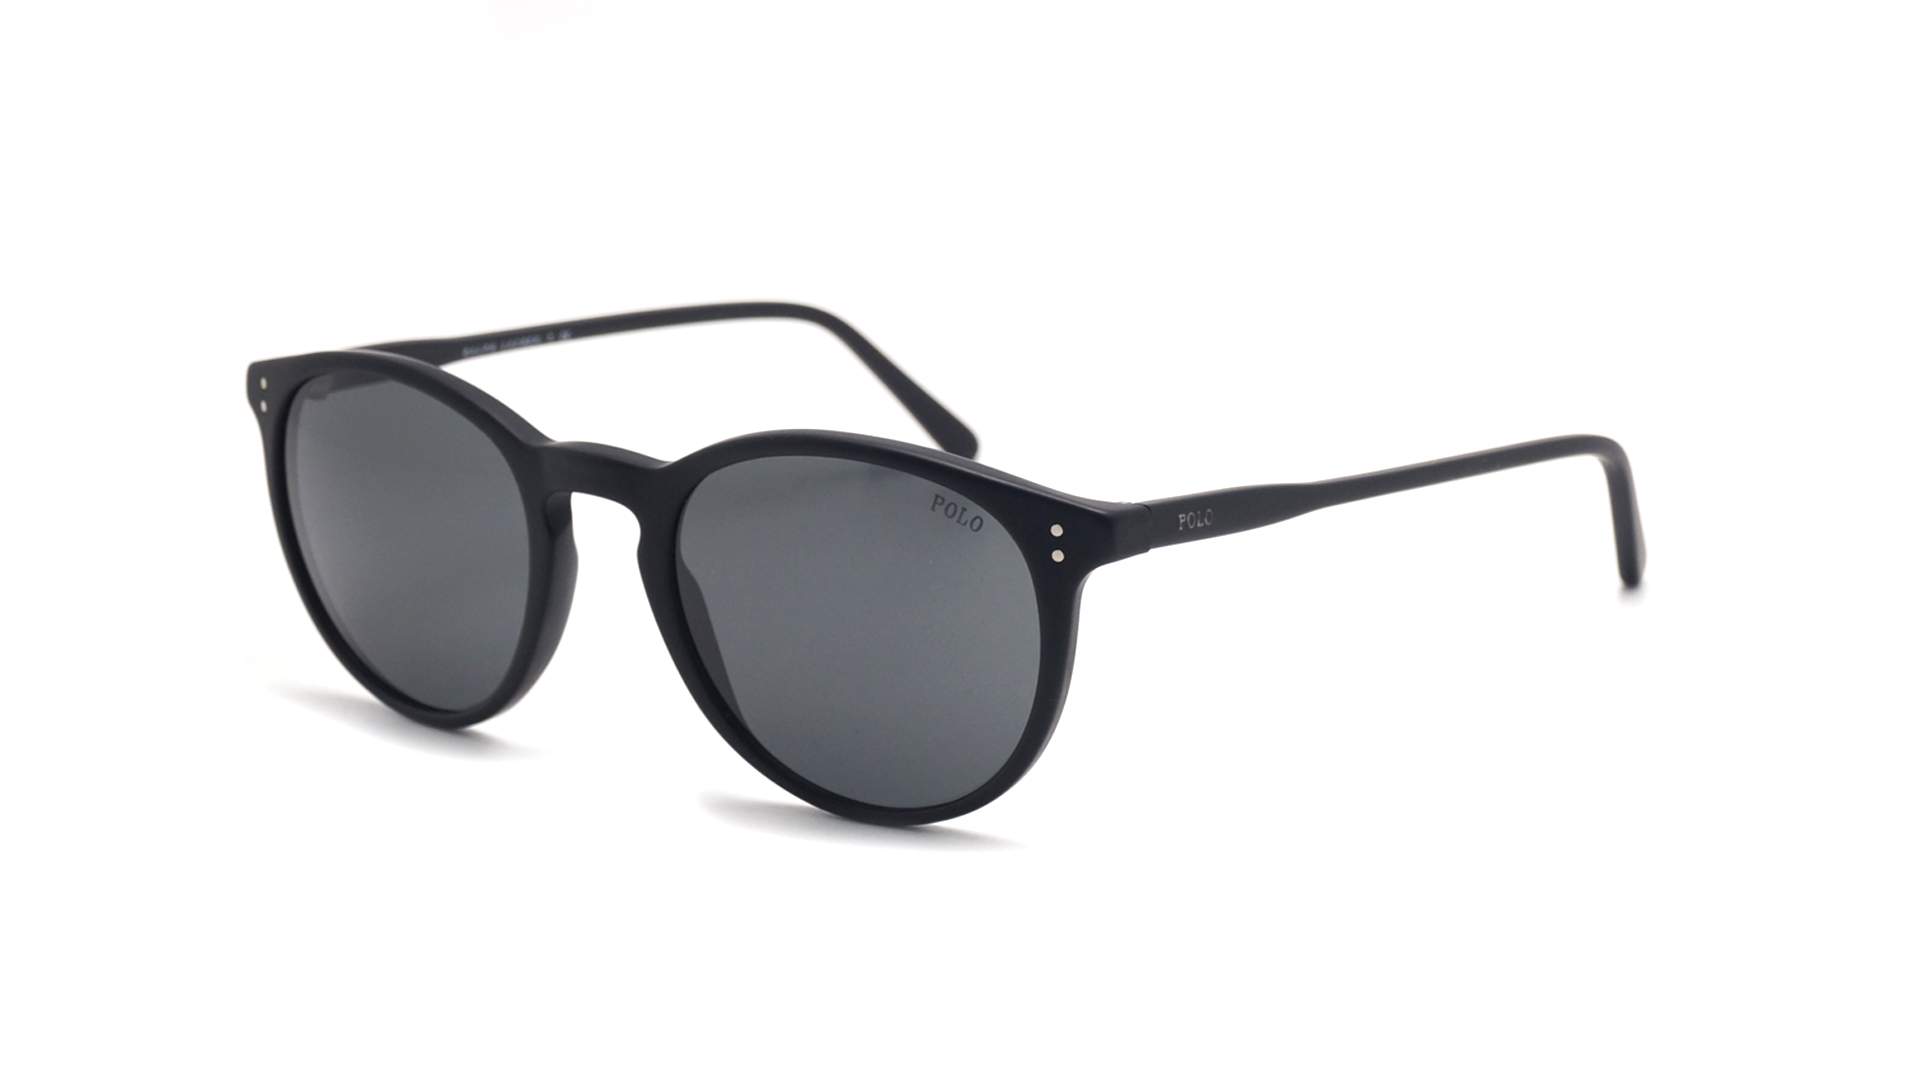 polo sunglasses ph4110